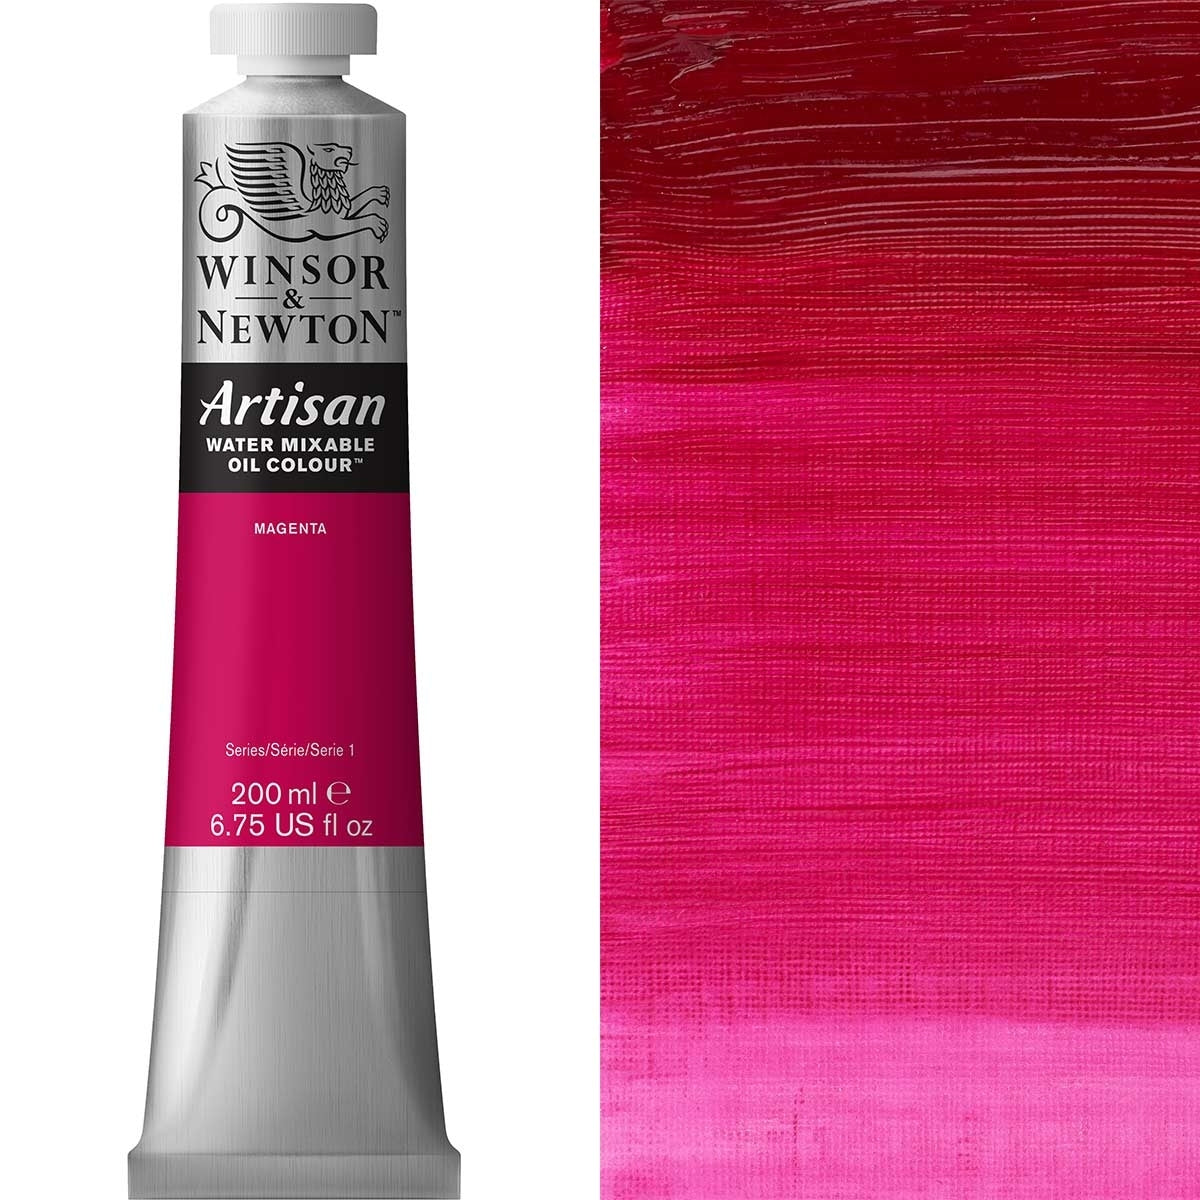 Winsor et Newton - Artisan Oil Color Watermixable - 200 ml - Magenta